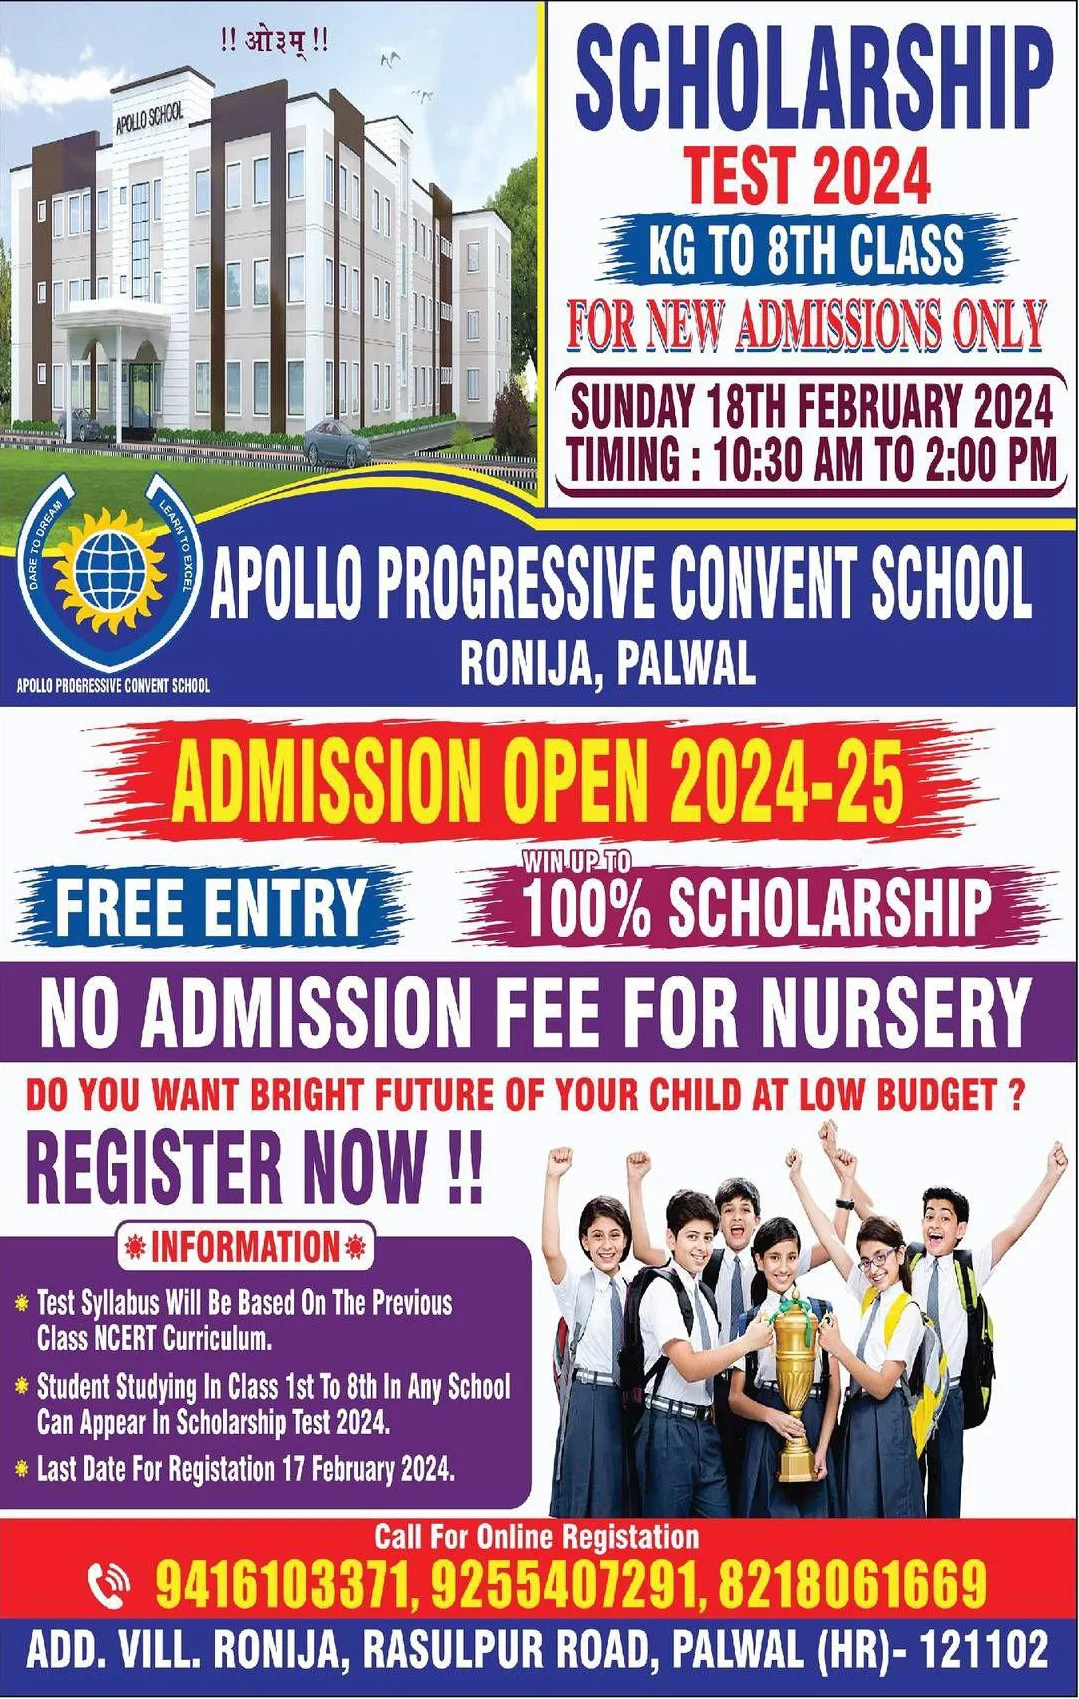 Apollo Progressive Convent School: An Examination of Educational Promise